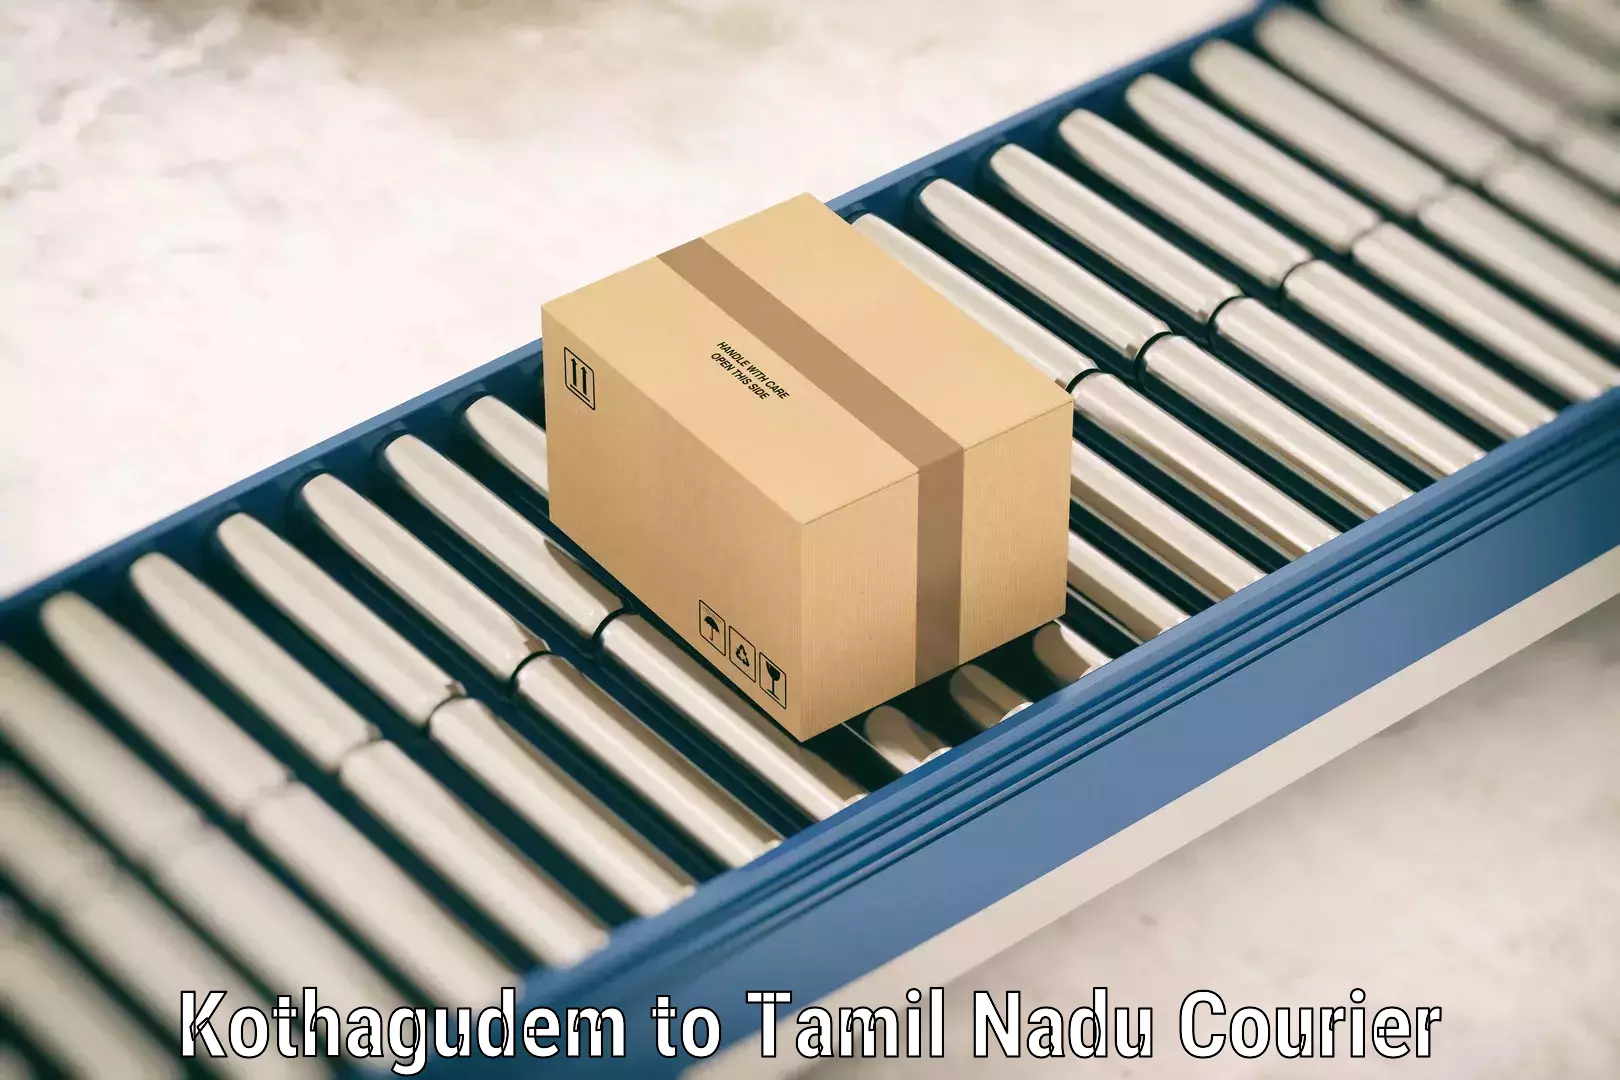 Luggage delivery app Kothagudem to Tirukalukundram